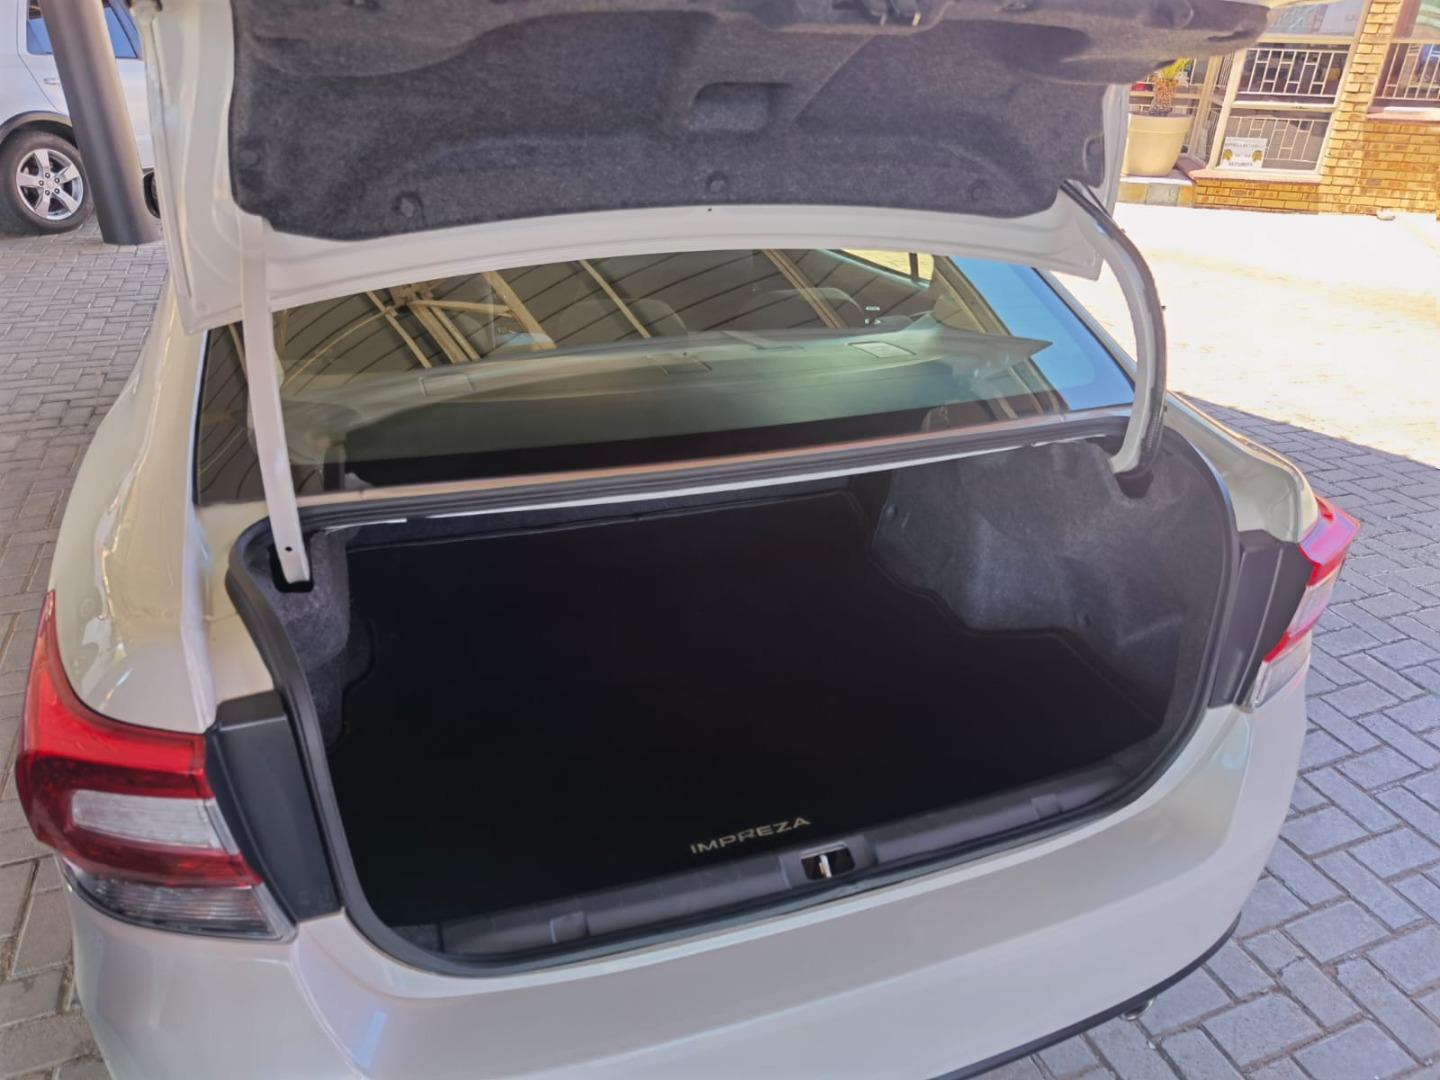 2019 Subaru Impreza boot space 